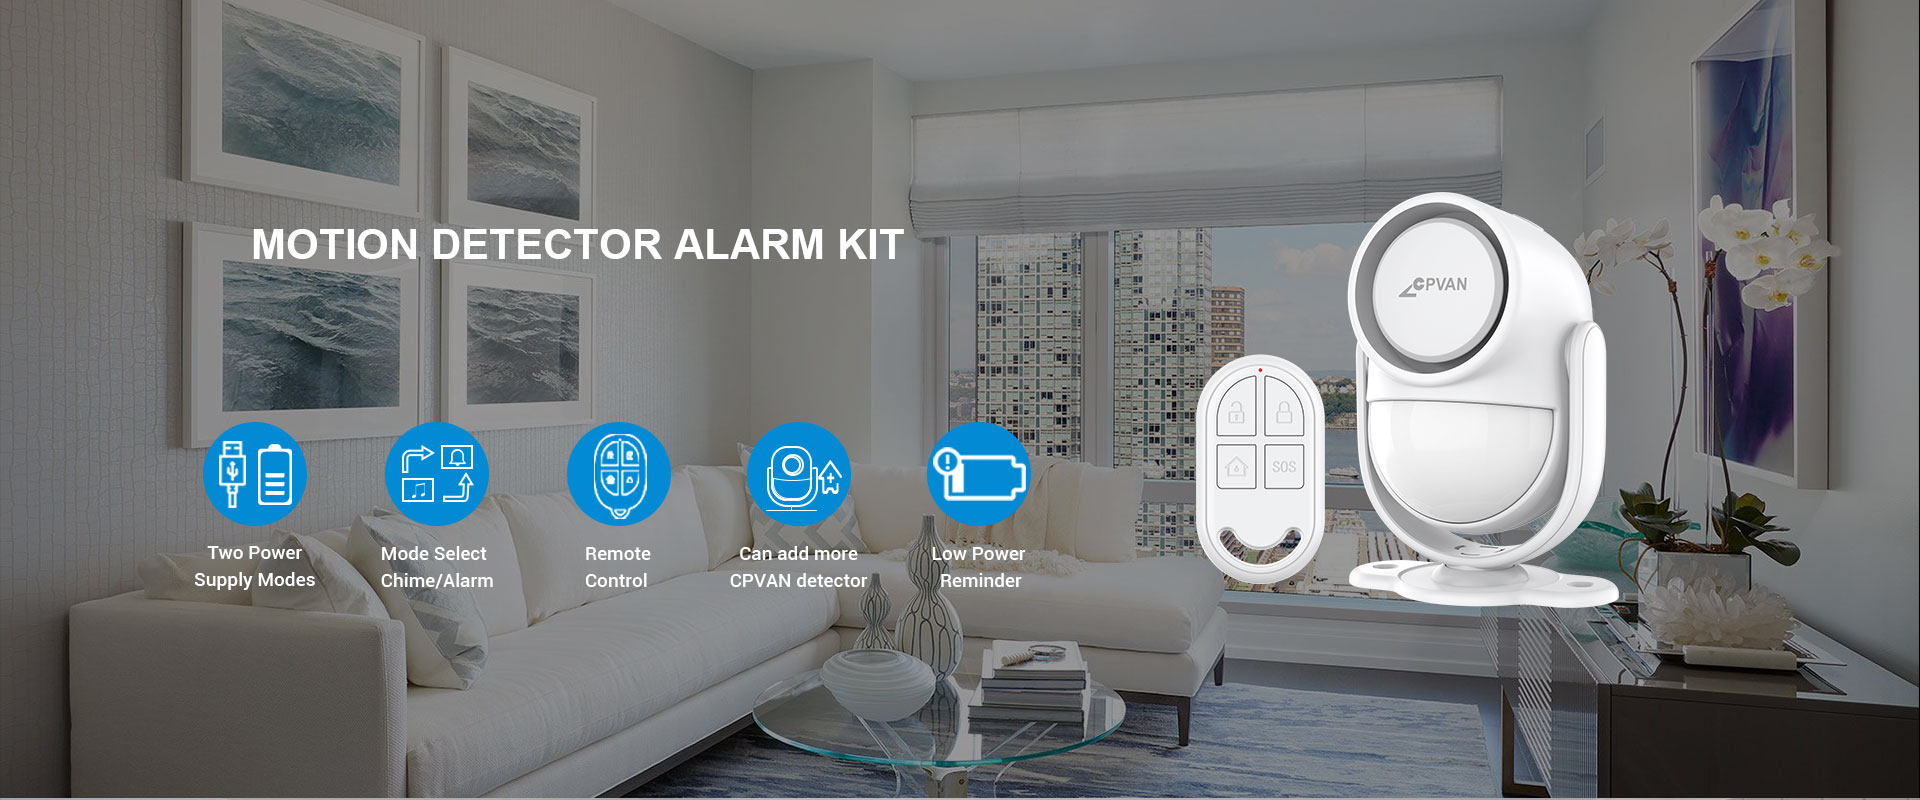 Motion Detector Alarm Kit